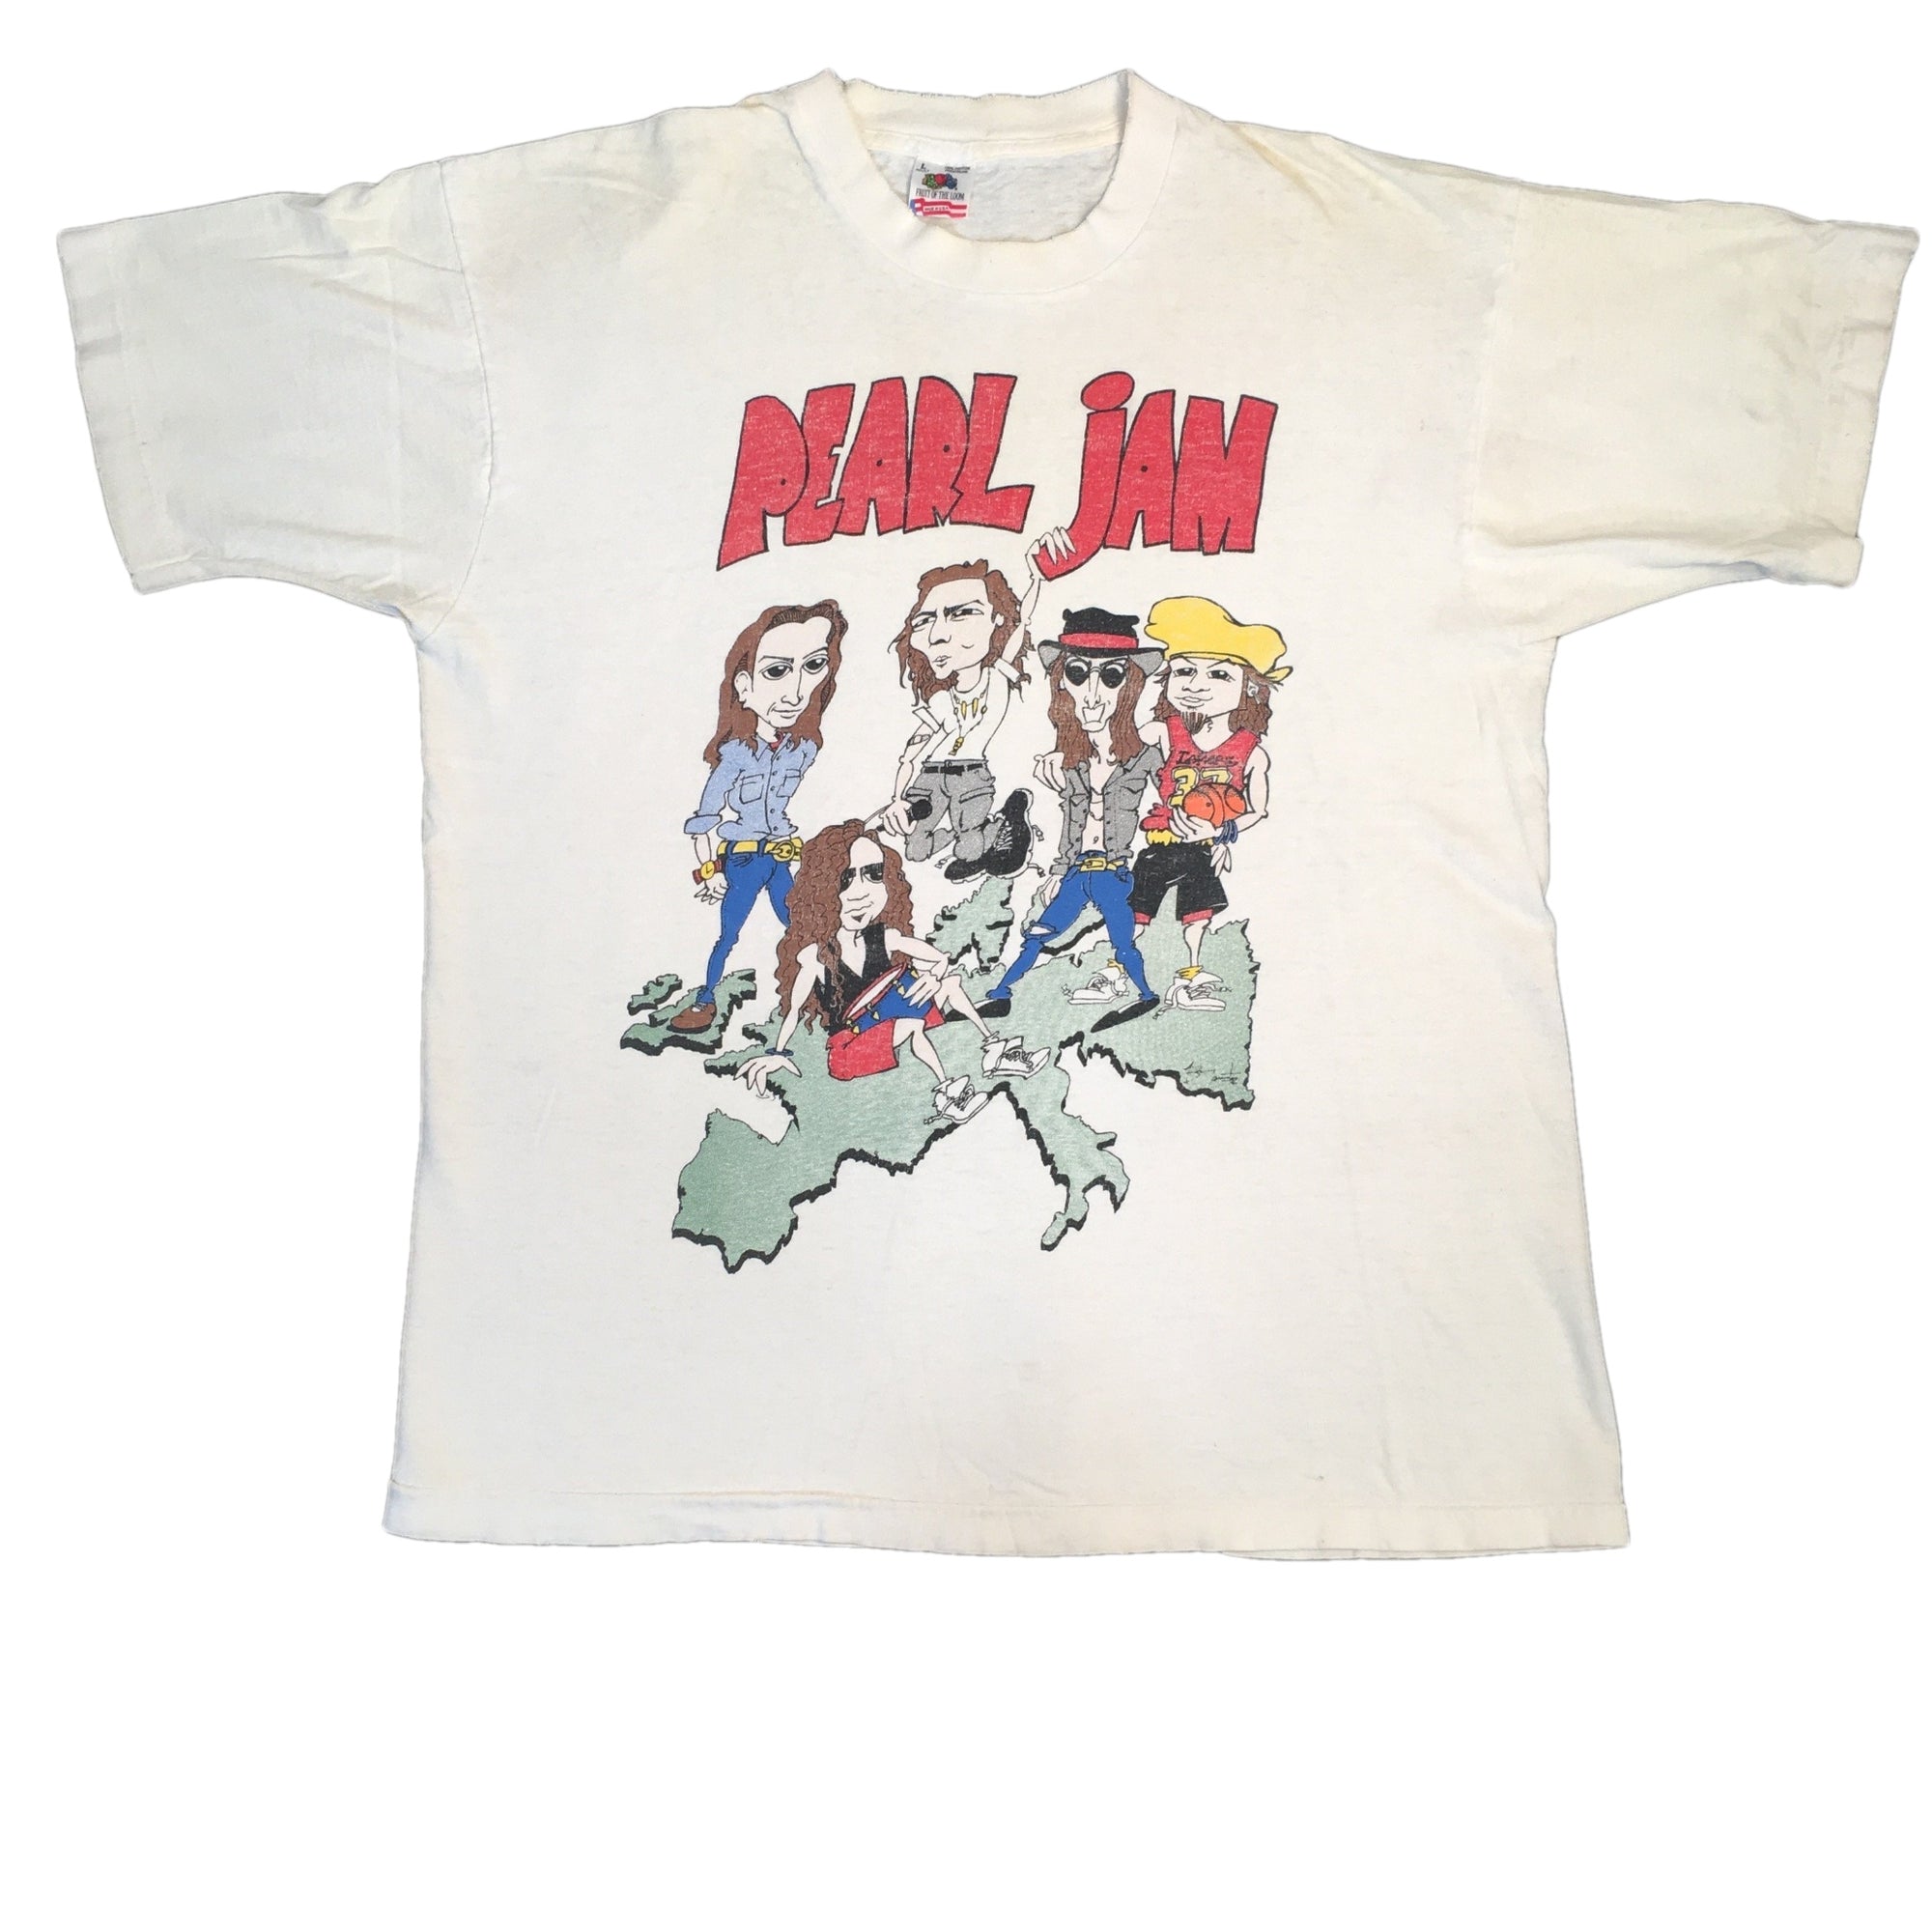 Vintage Pearl Jam "World Jam" T-Shirt - jointcustodydc